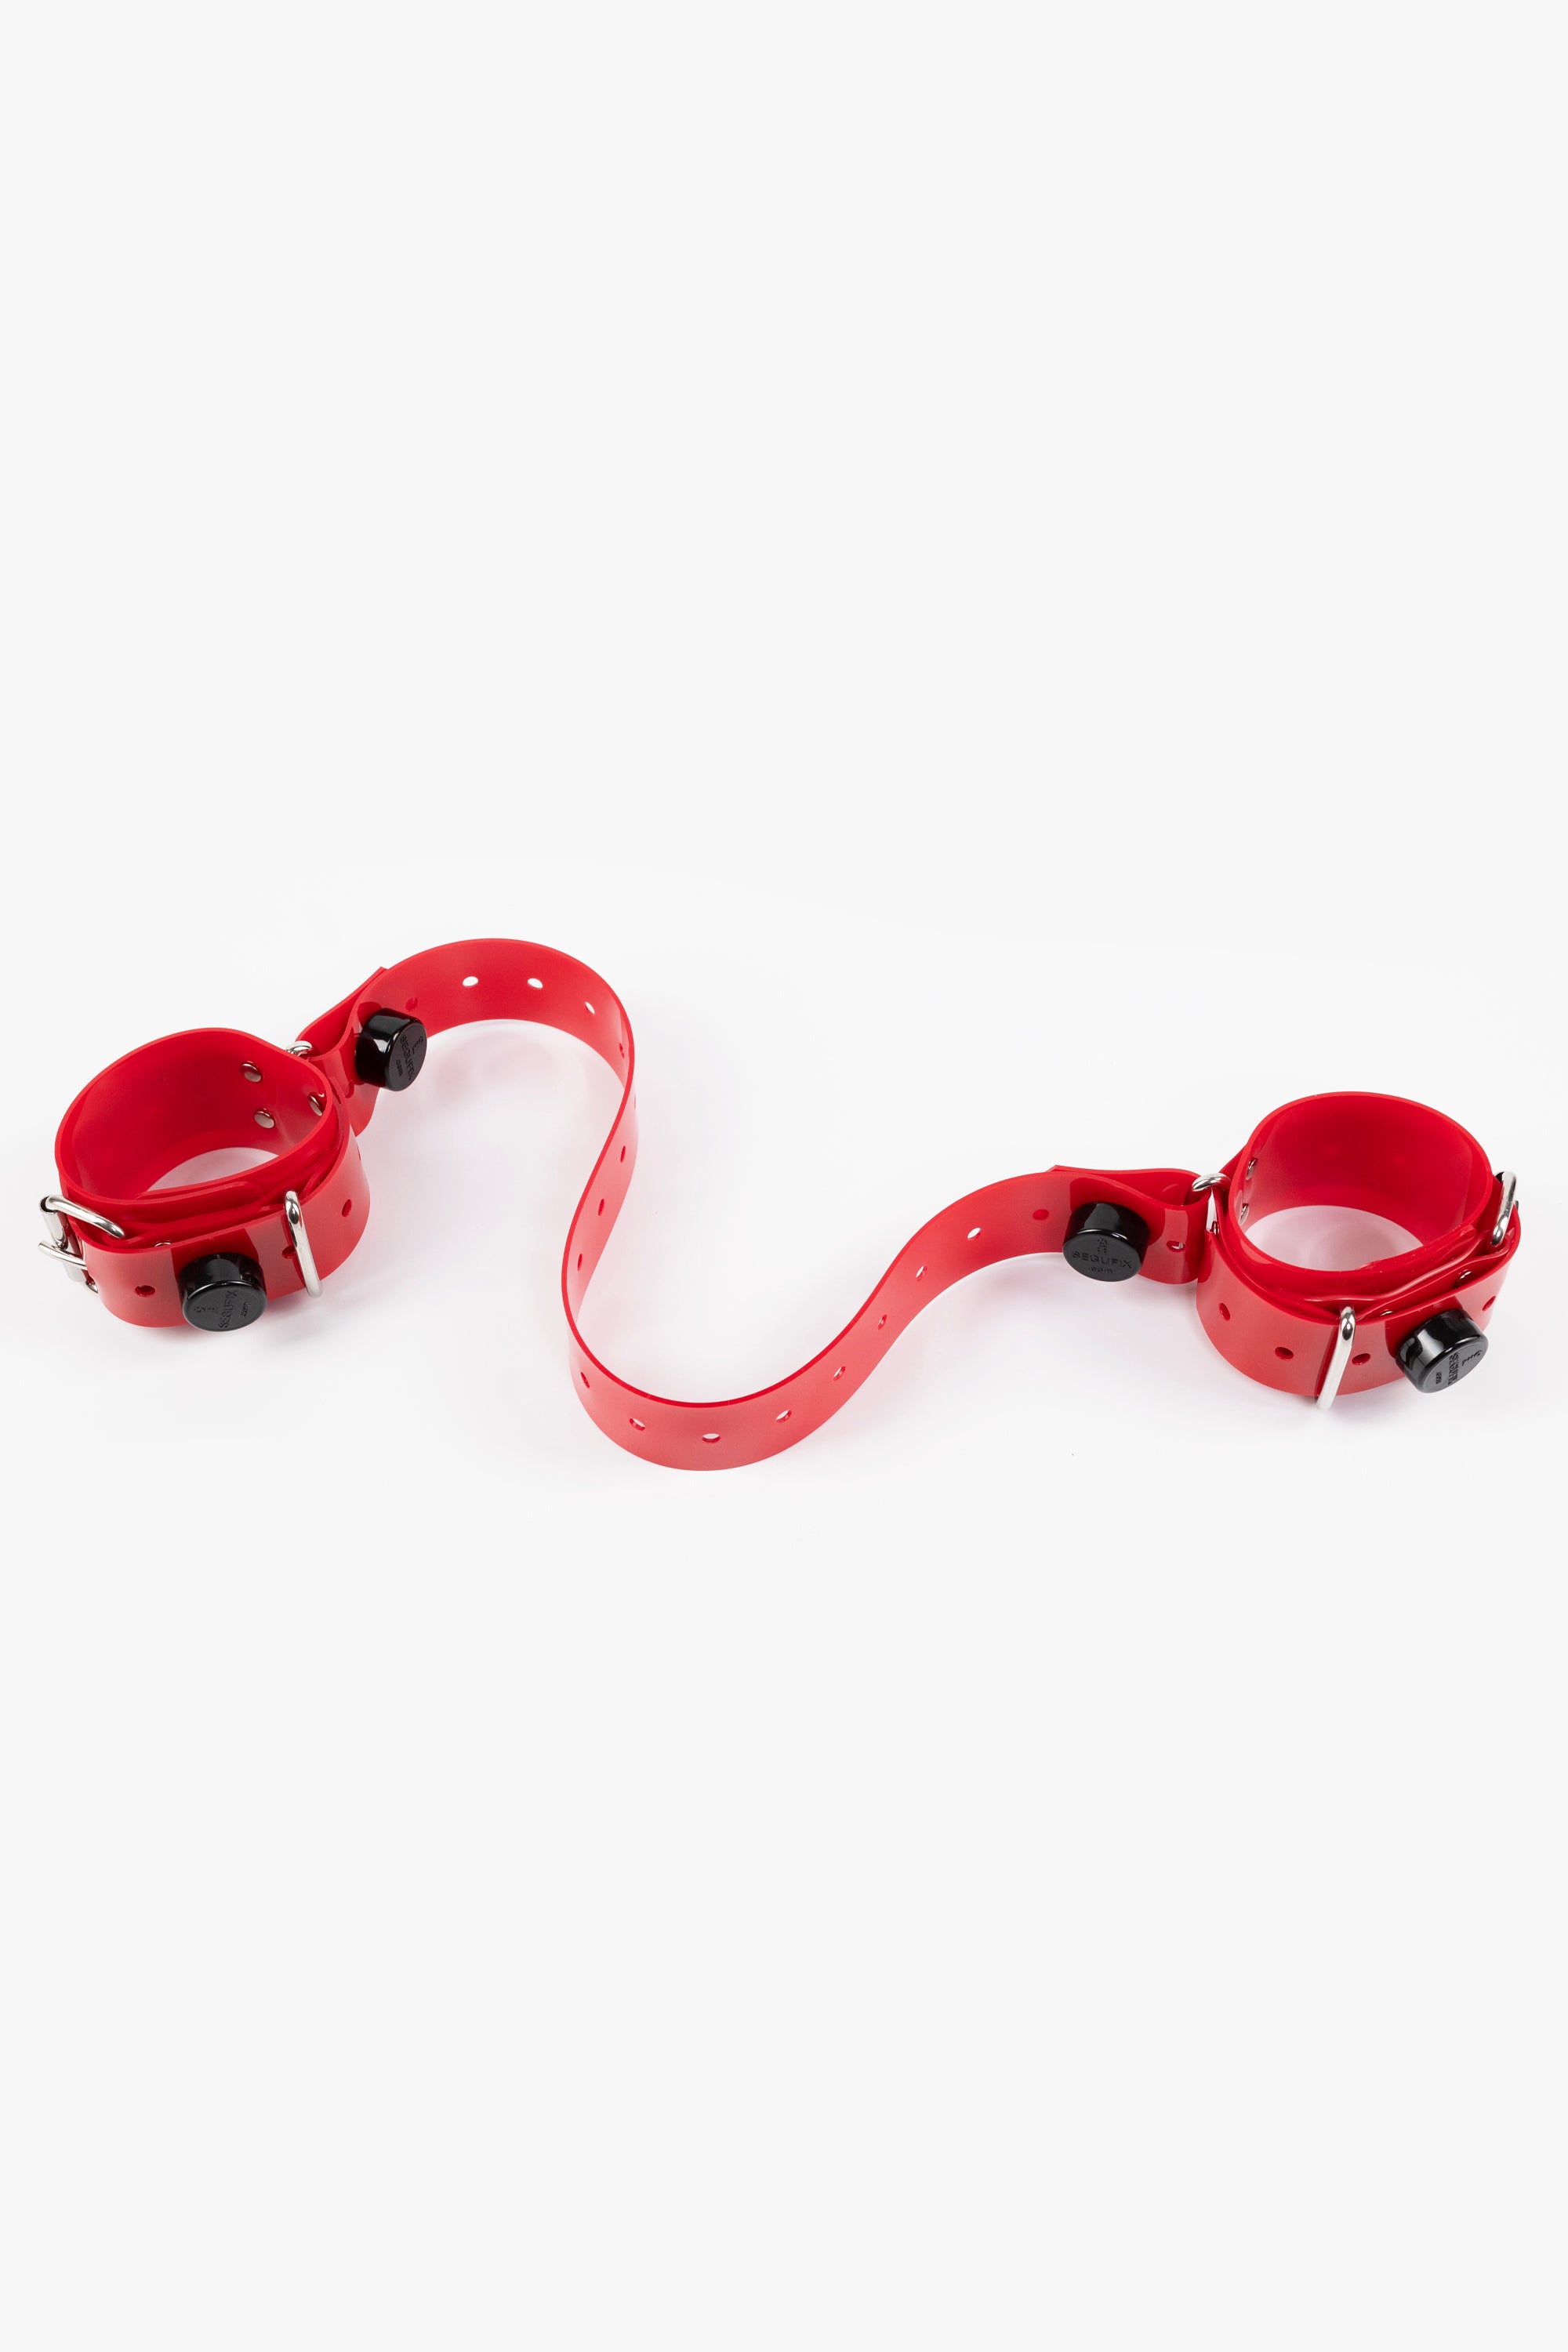 Connection strap, segufix items compatible 70 cm, red/chrome